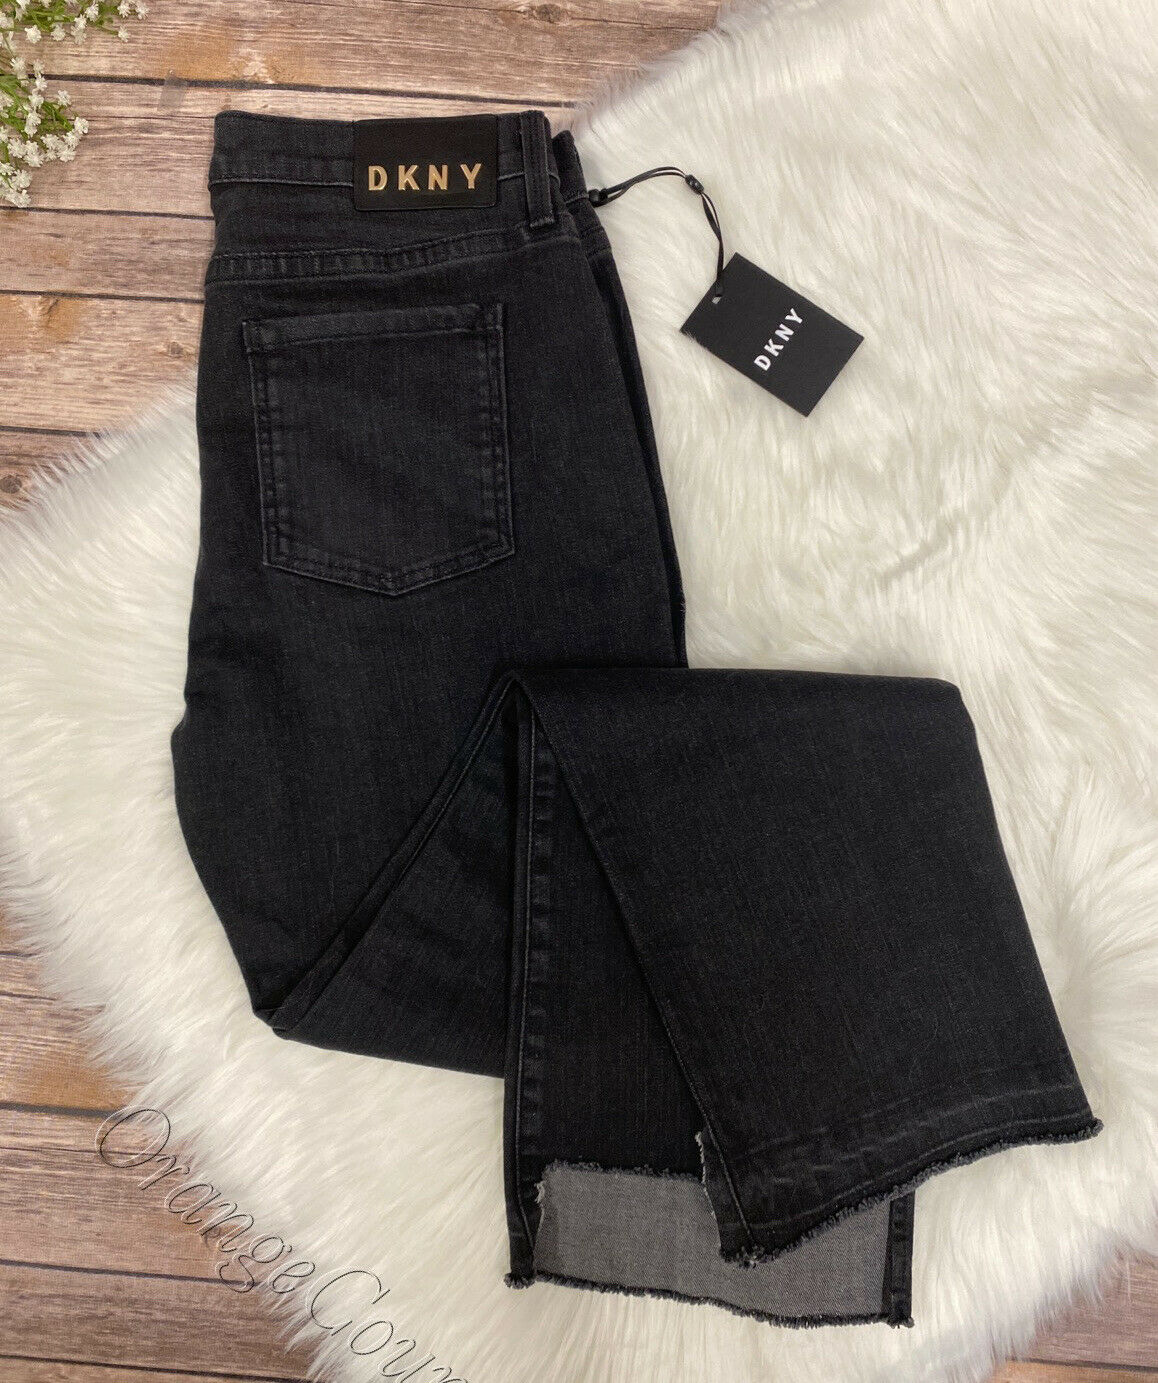 Women's Dkny Jeans Washed Black Straight Leg Pants High Low Hem Size 29, 30 New